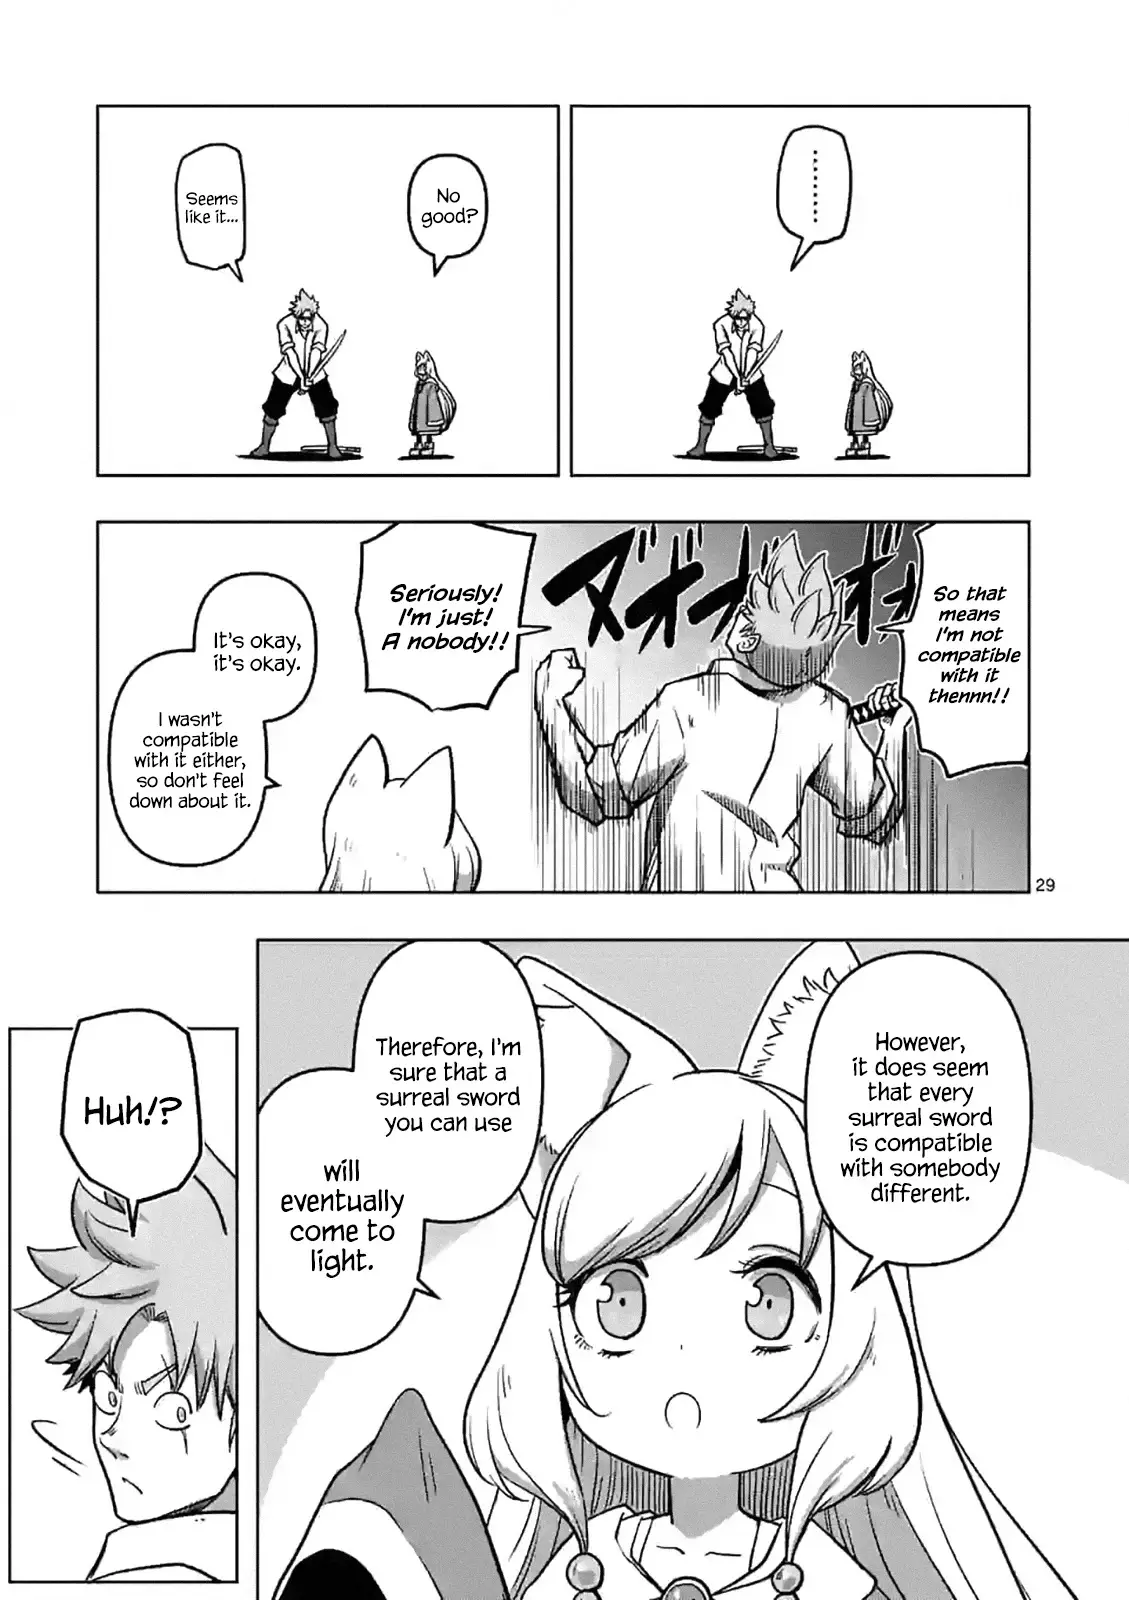 Verndio - Surreal Sword Saga - 1 page 29